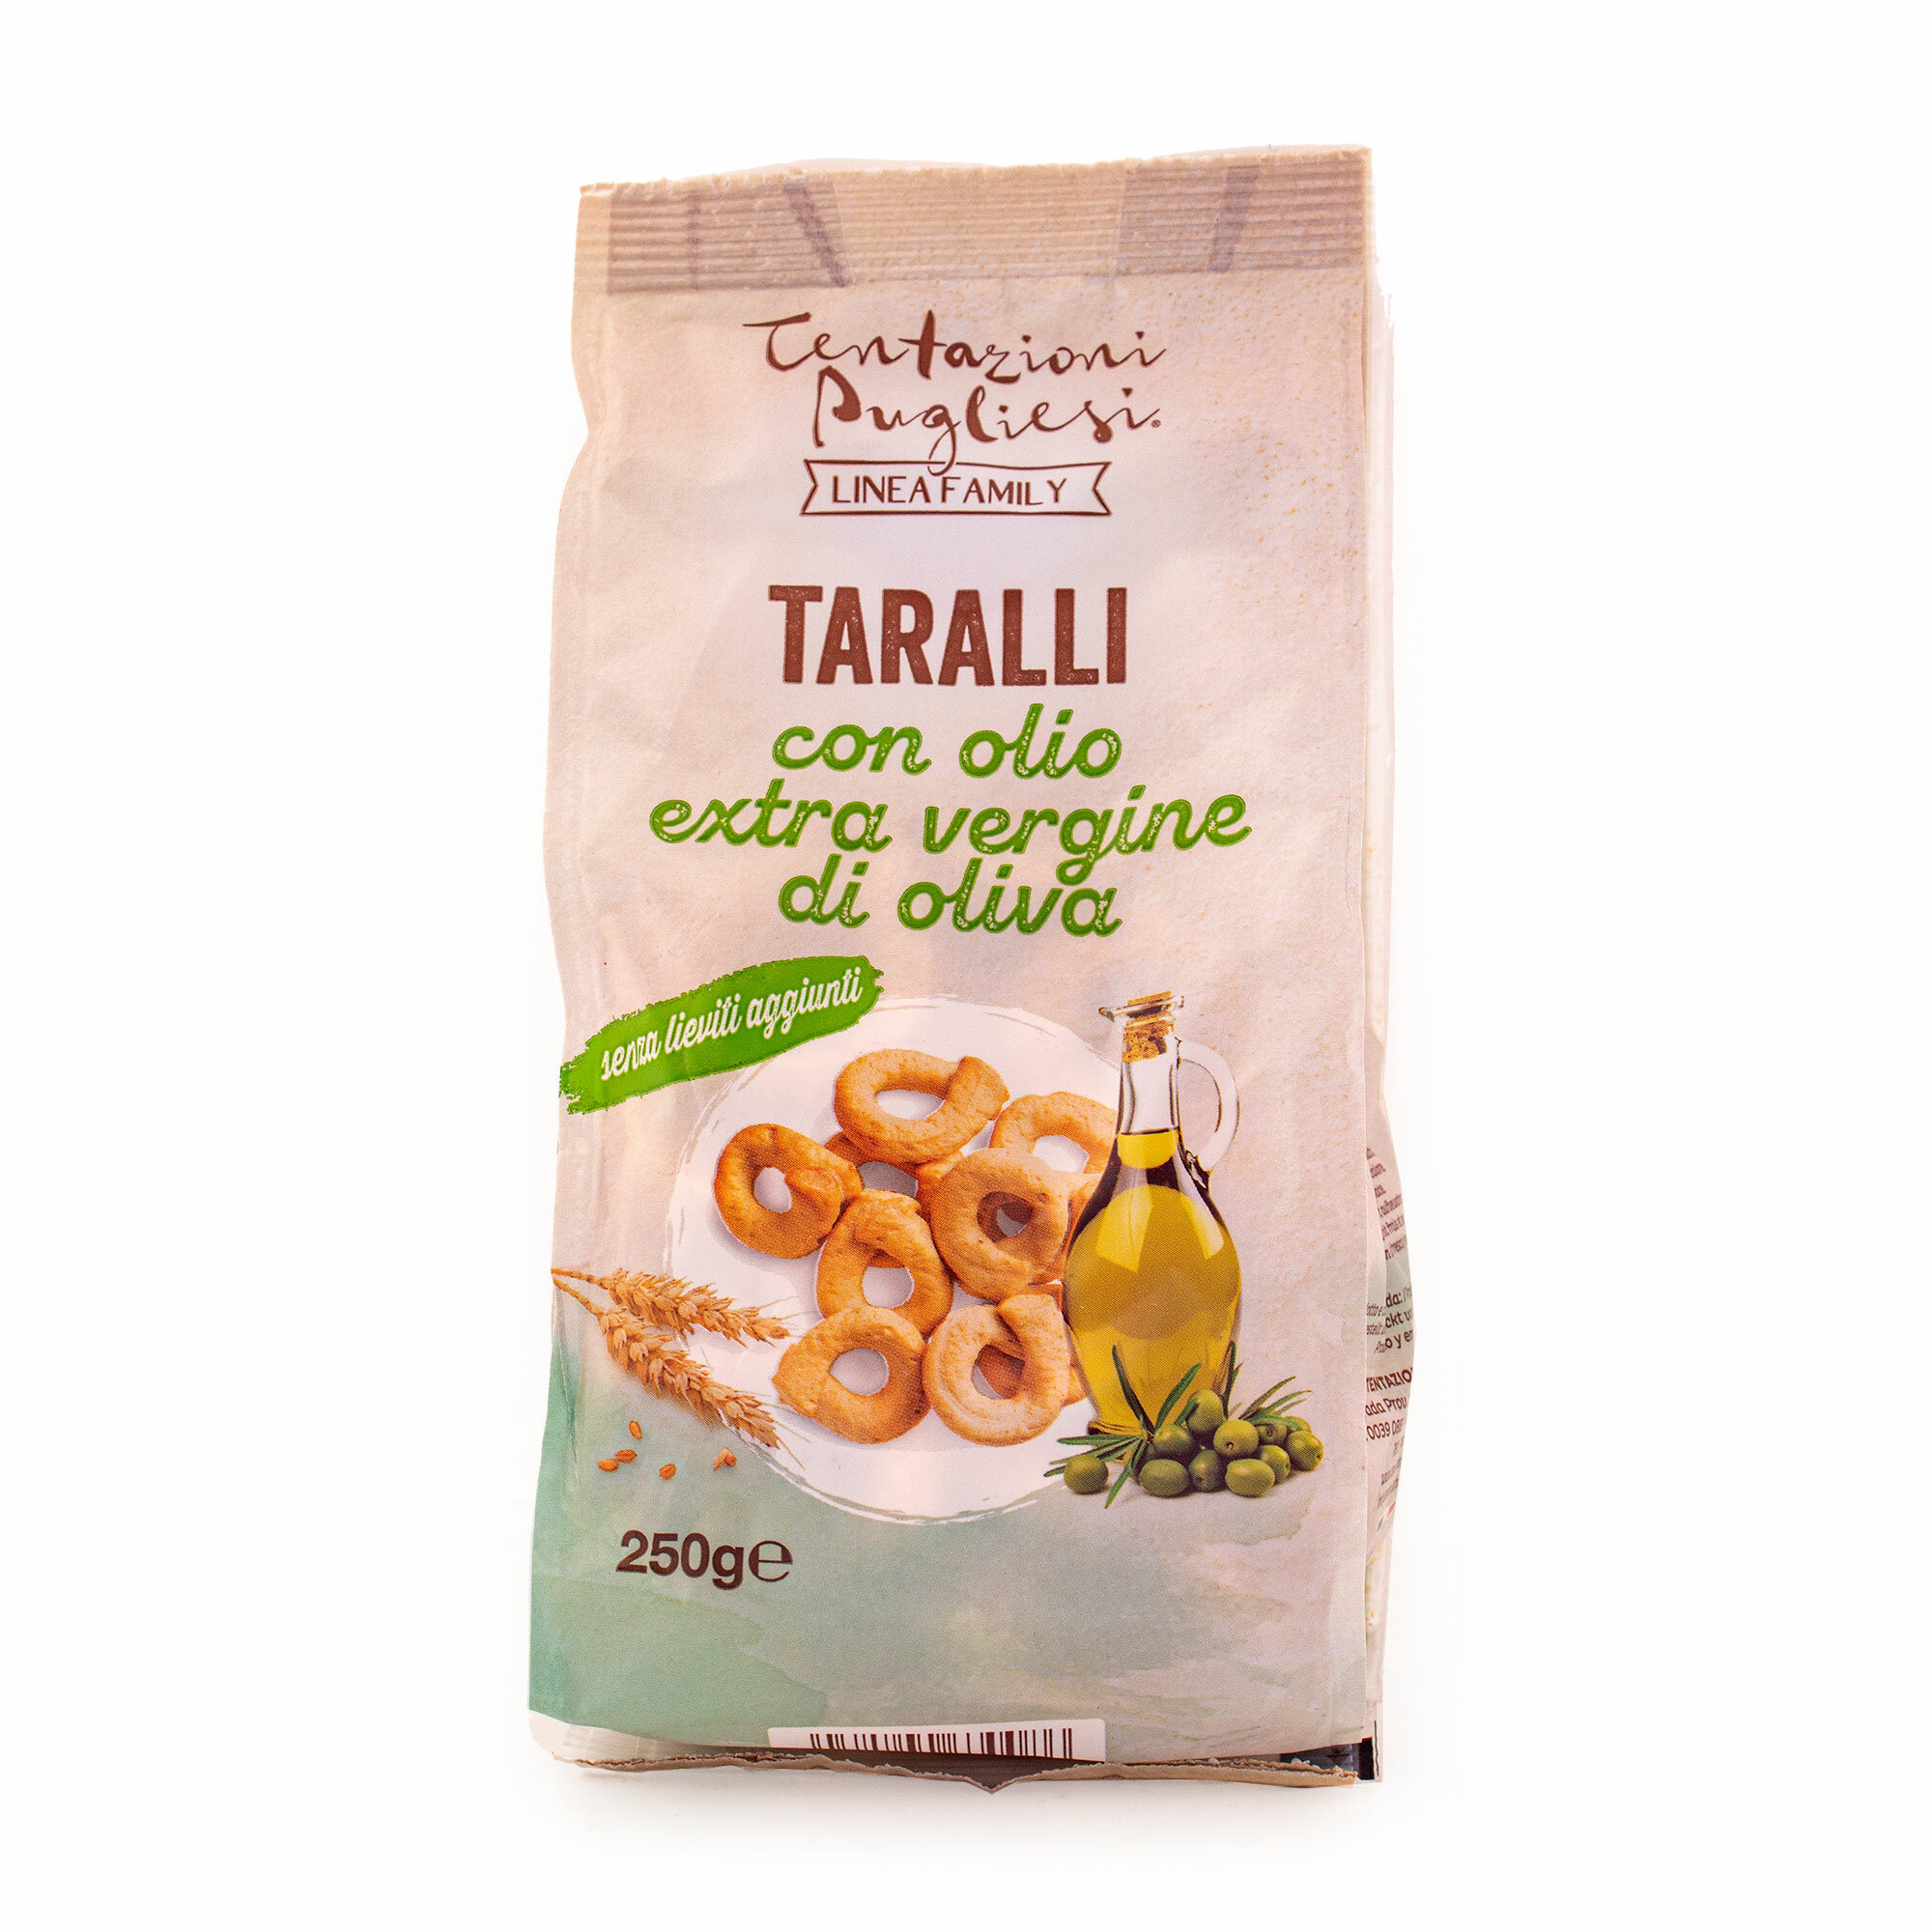 Таралли с оливковым маслом первого холодного отжима (экстра верджин) LINEA FAMILY, TENTAZIONI PUGLIESI, 0,250 кг